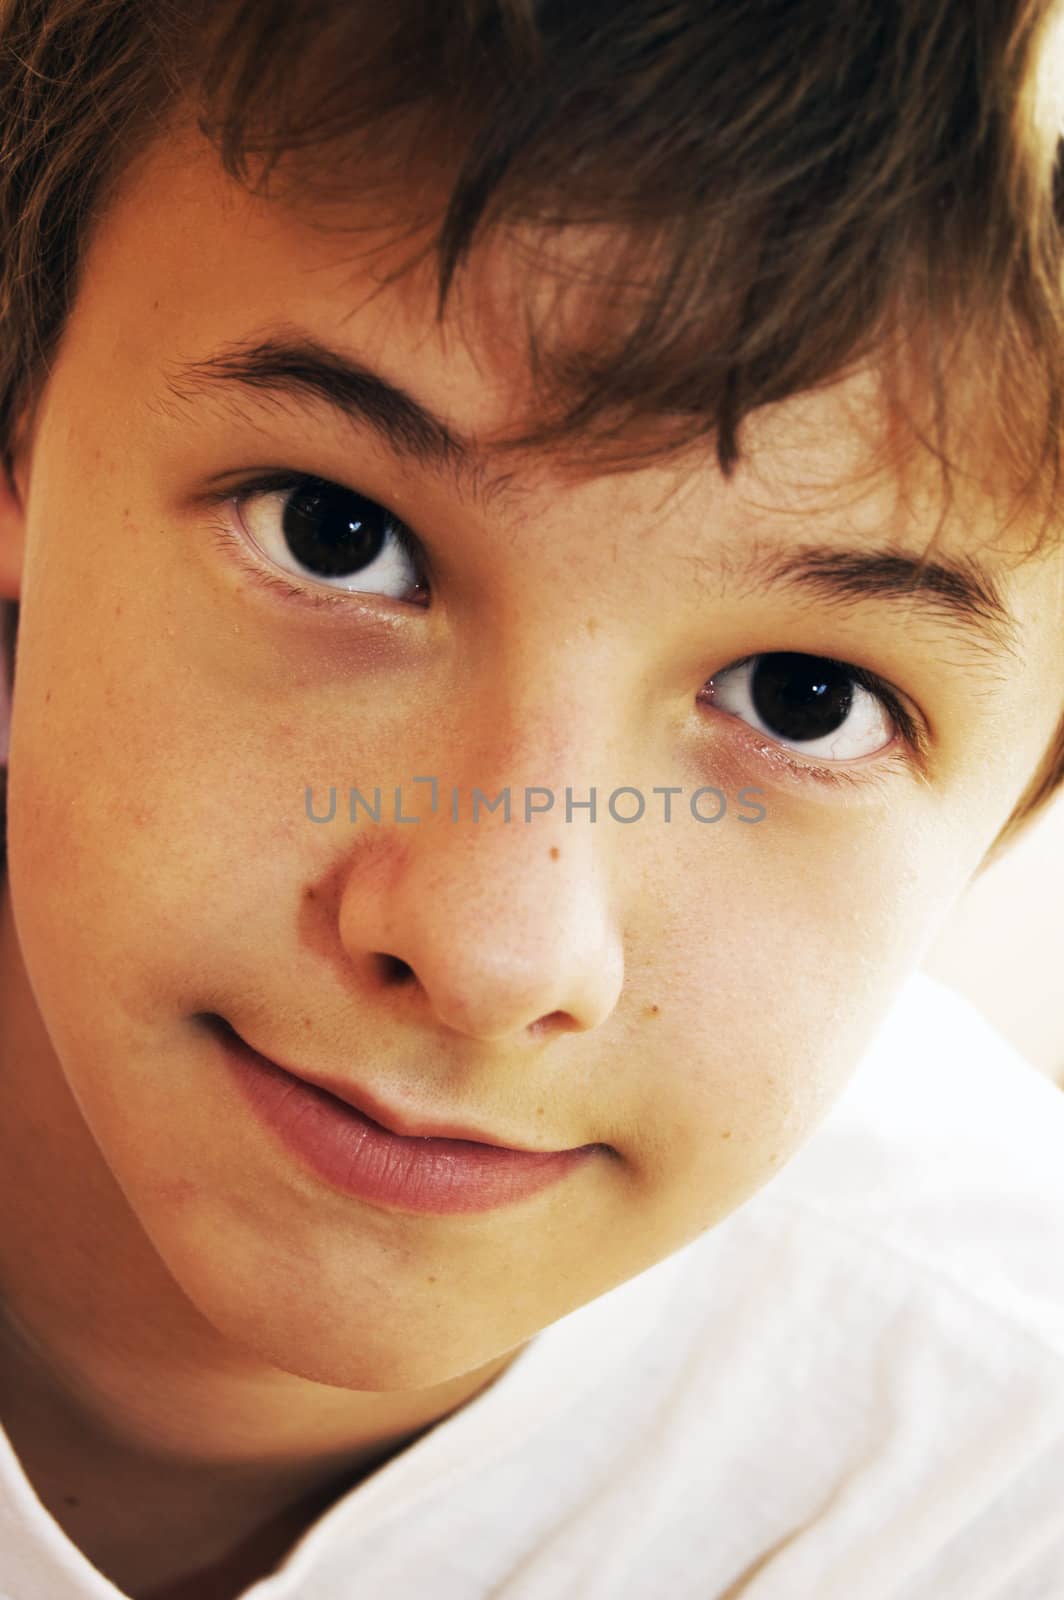 Cute boy by photocreo